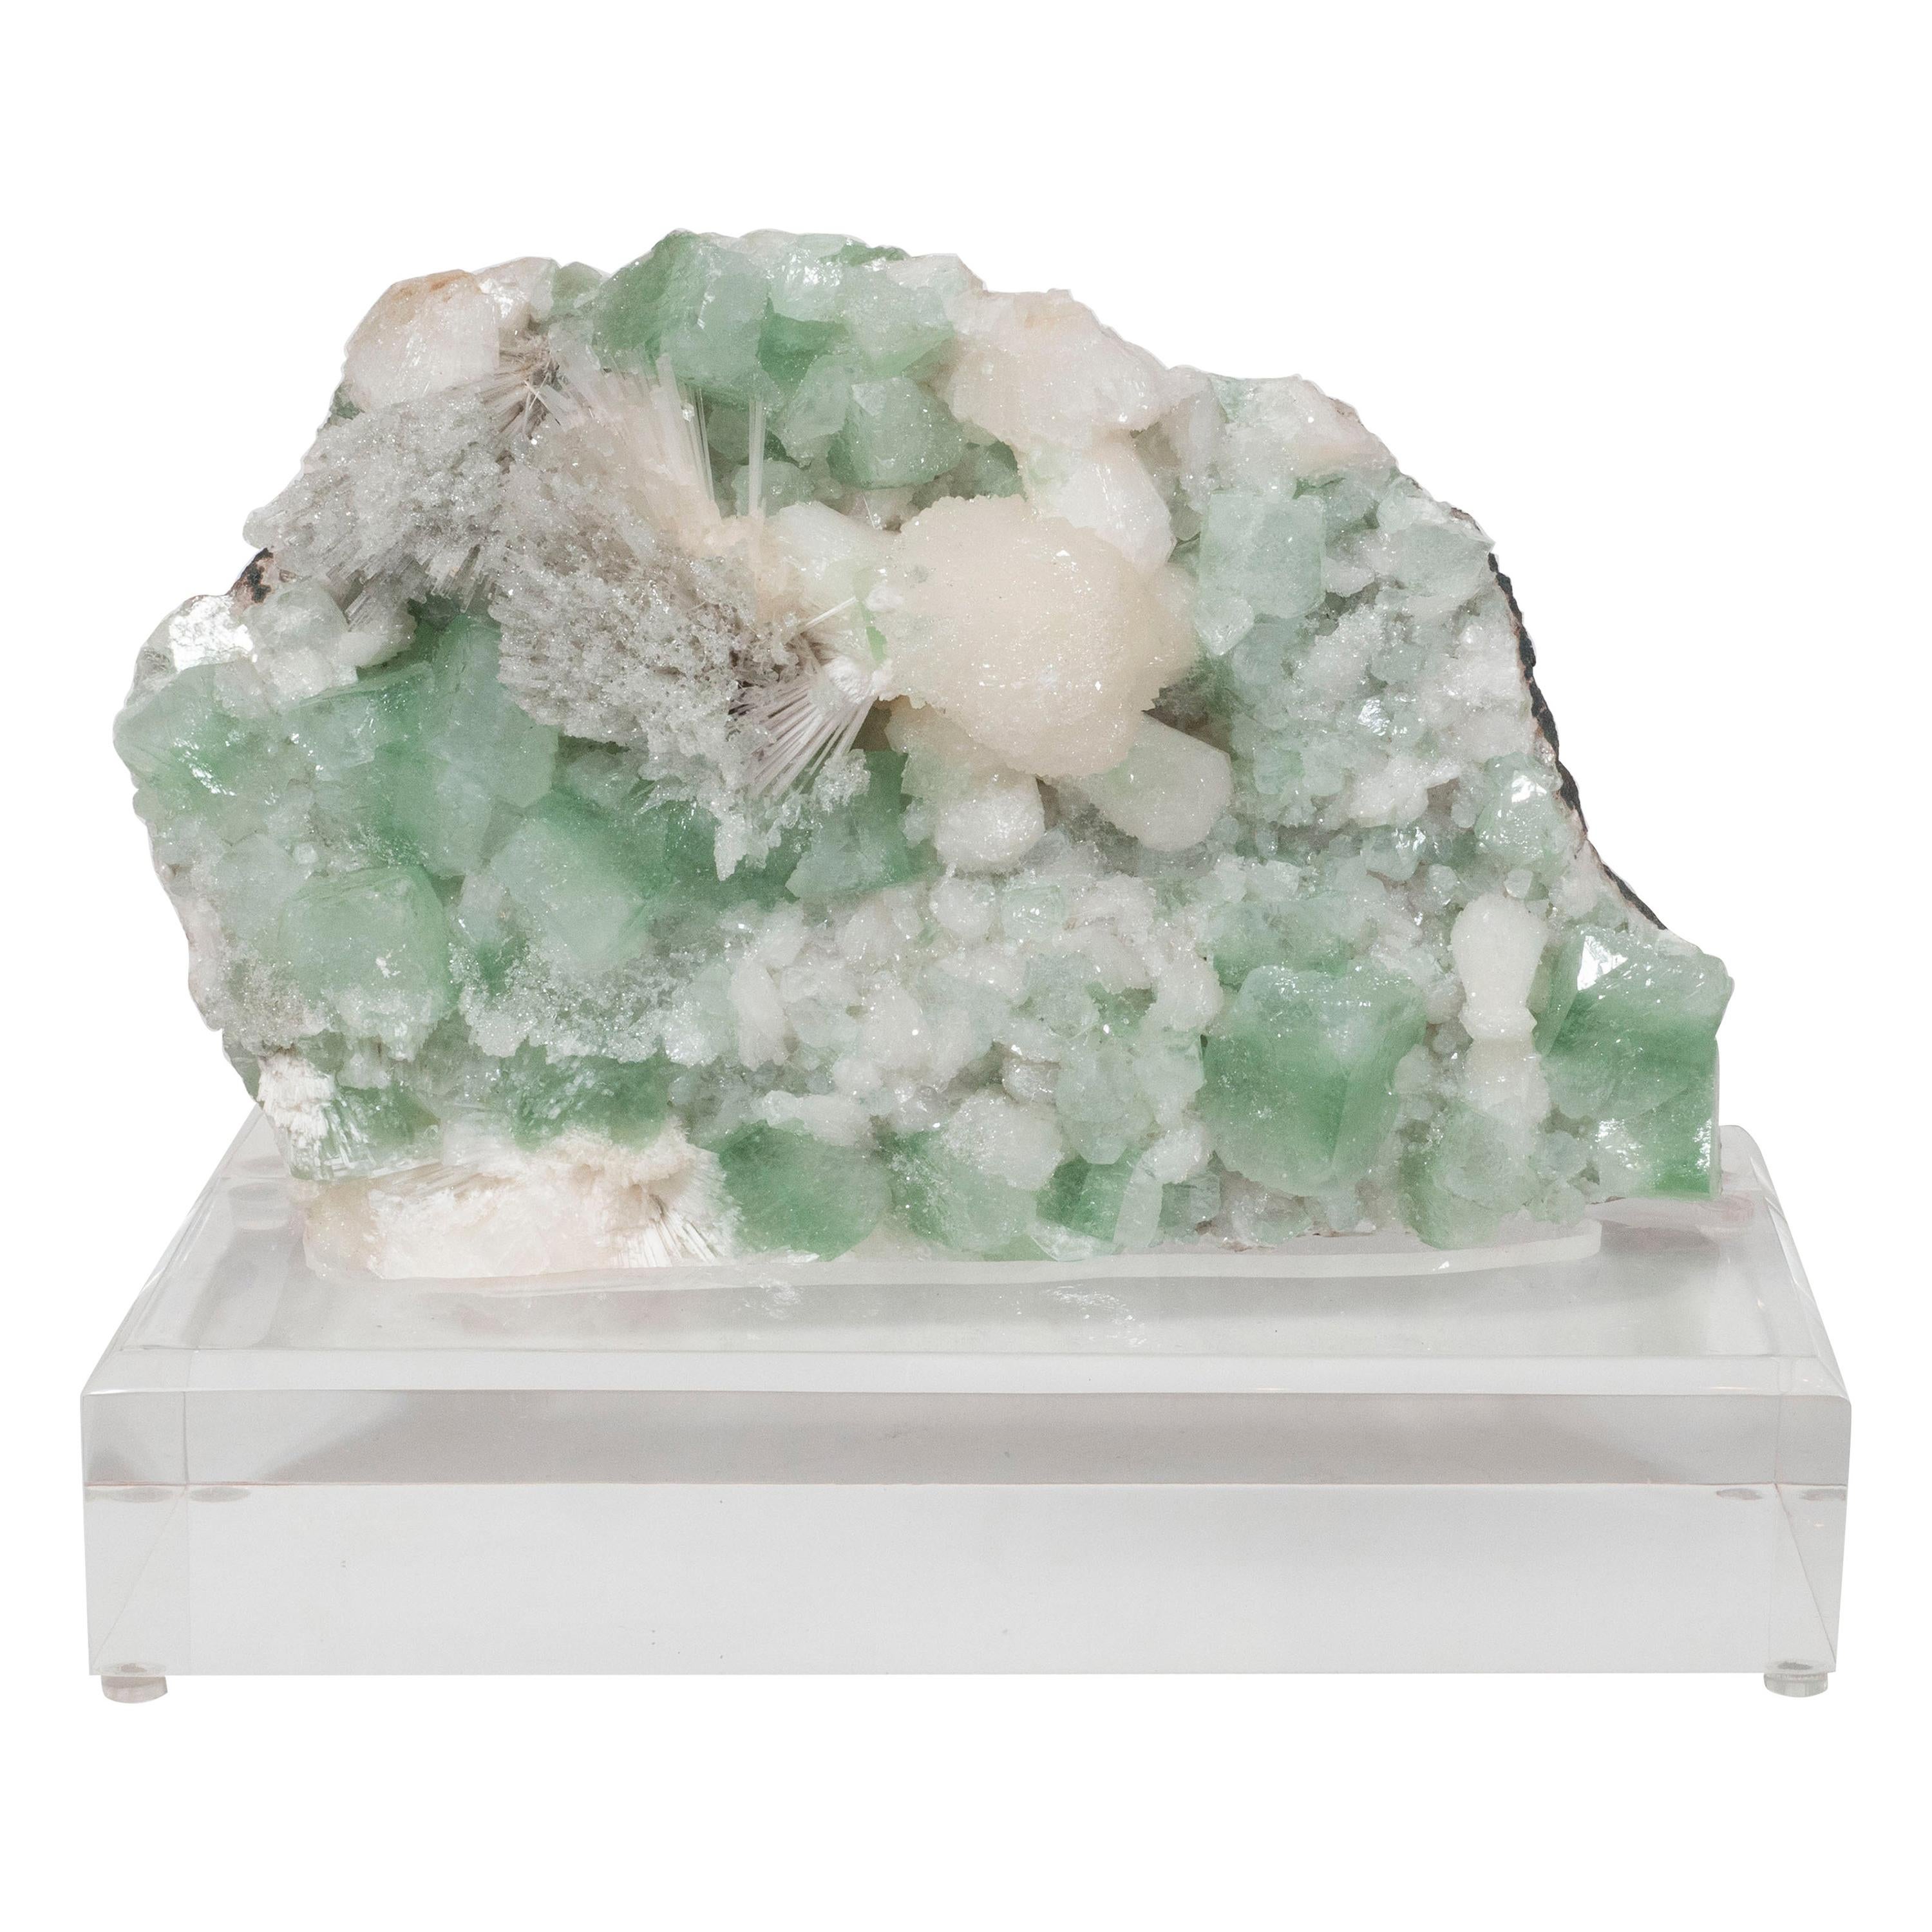 Rare Modernist Green Apophylite & Scolocite Rock Crystal Specimen on Lucite Base